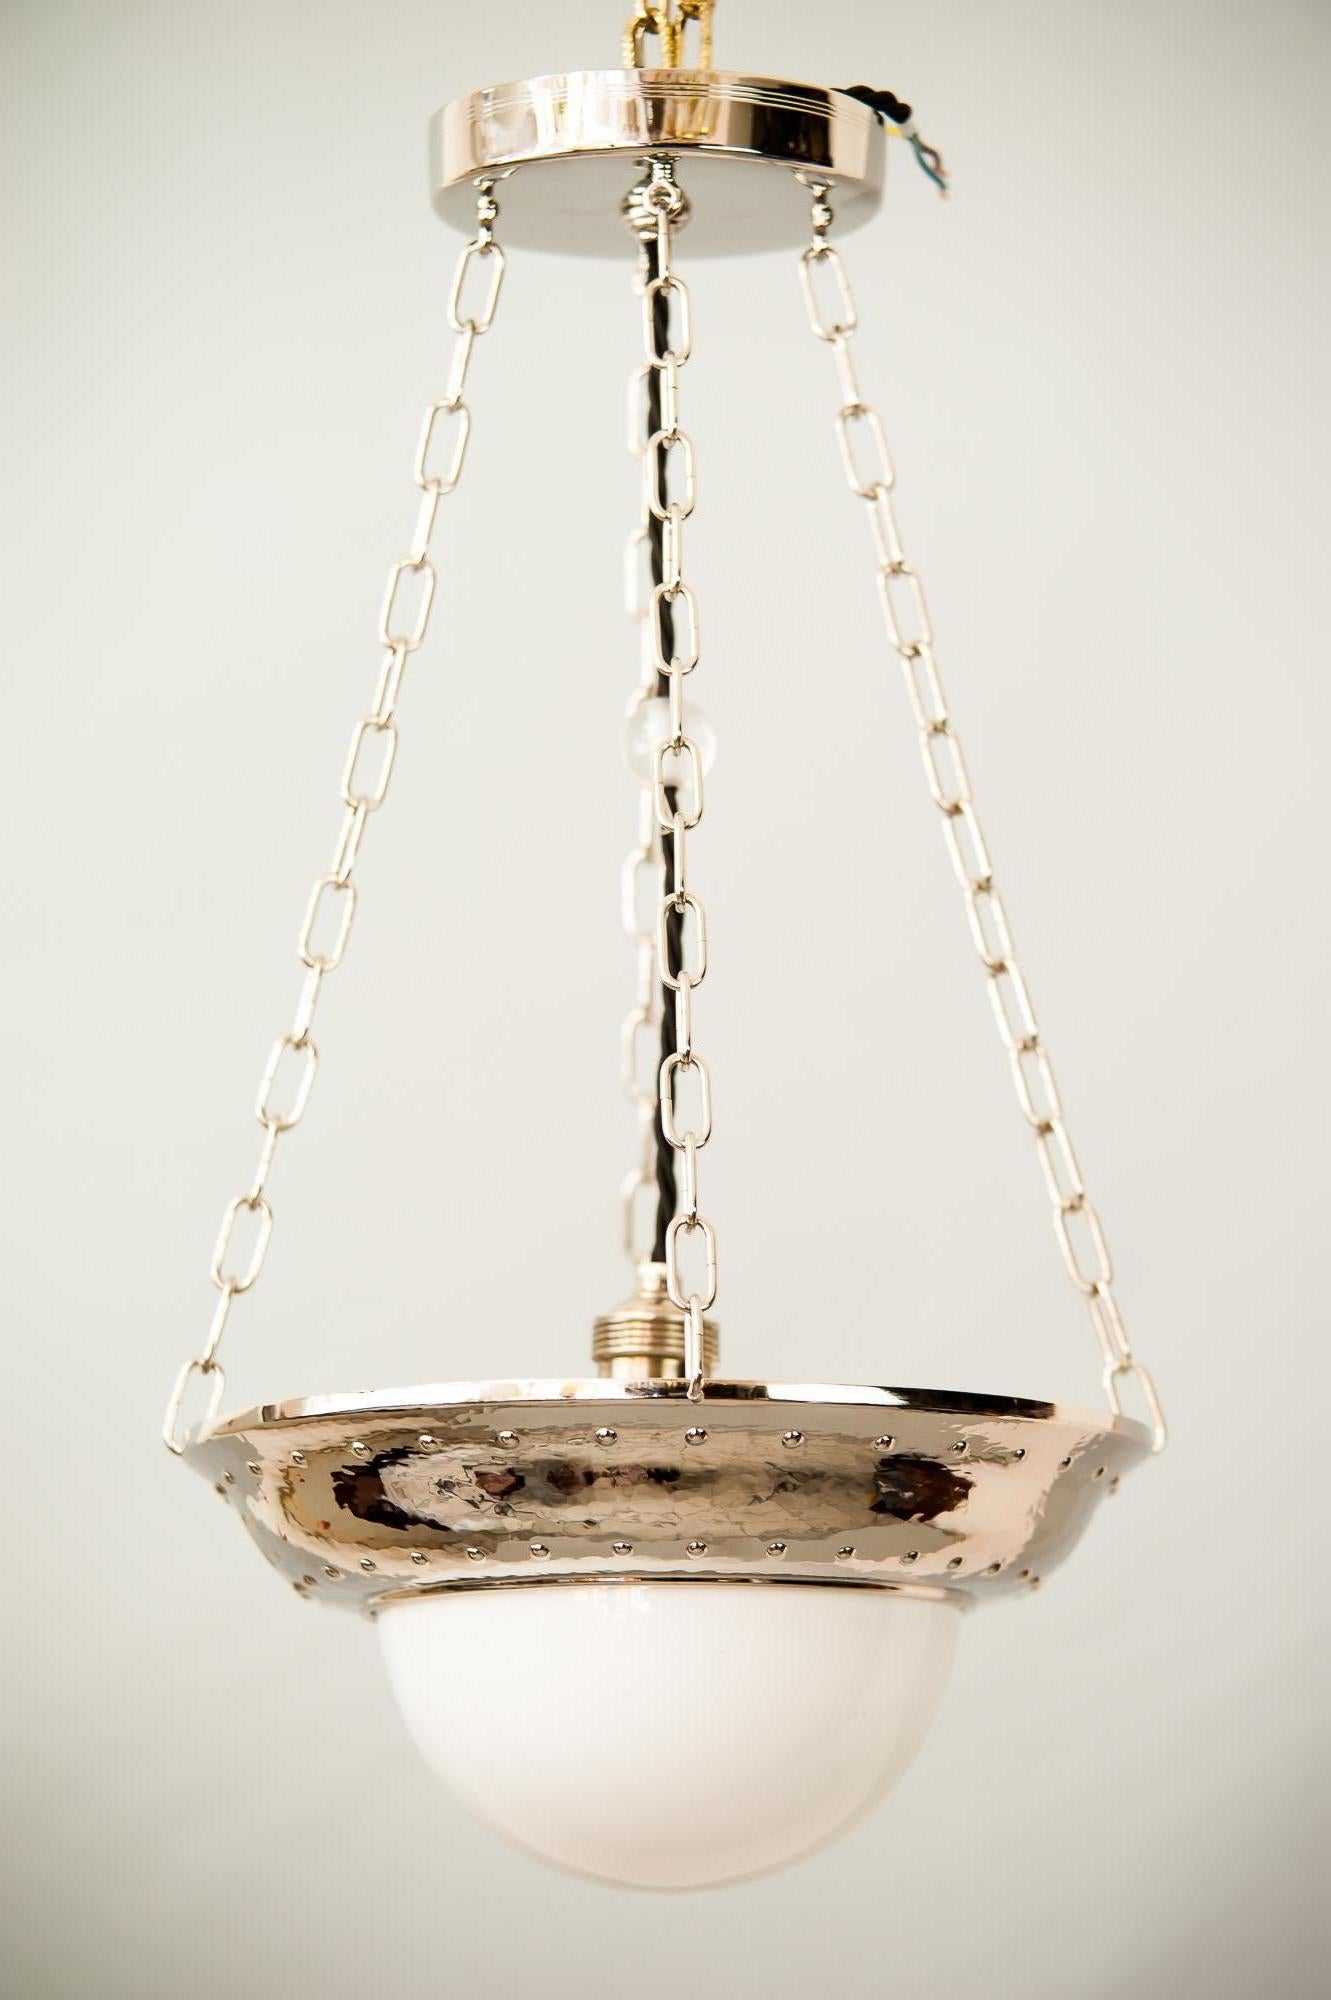 Art Deco nickel pendant with original glass, circa 1920s
Nickel-plated.